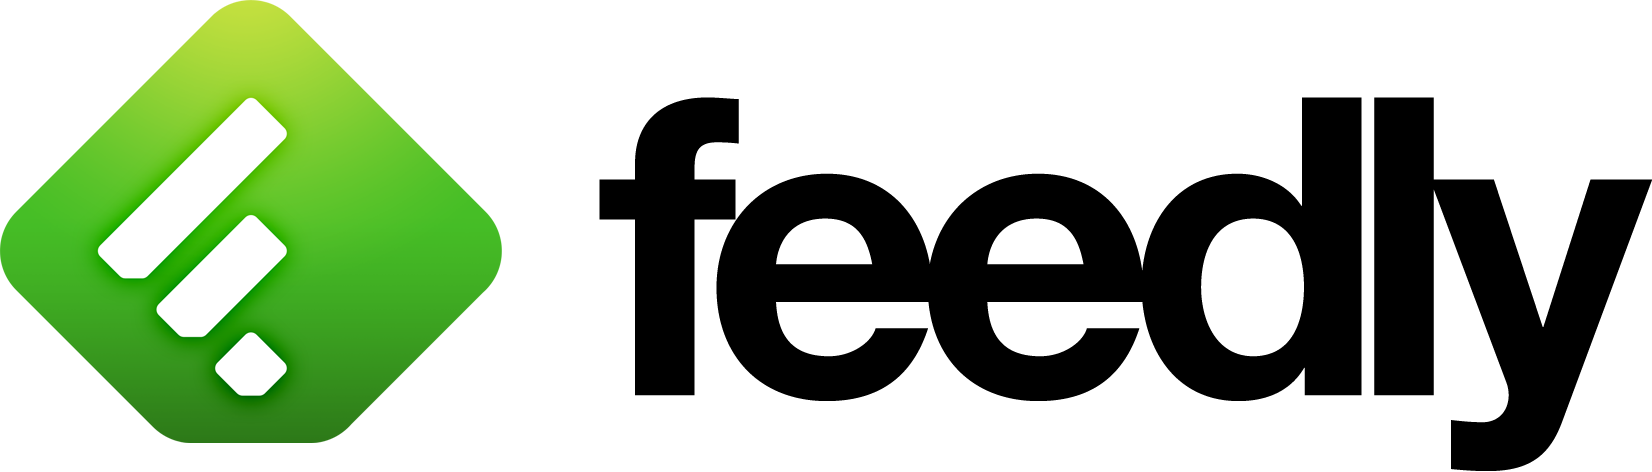 feedly-logo-june-2012-black-color